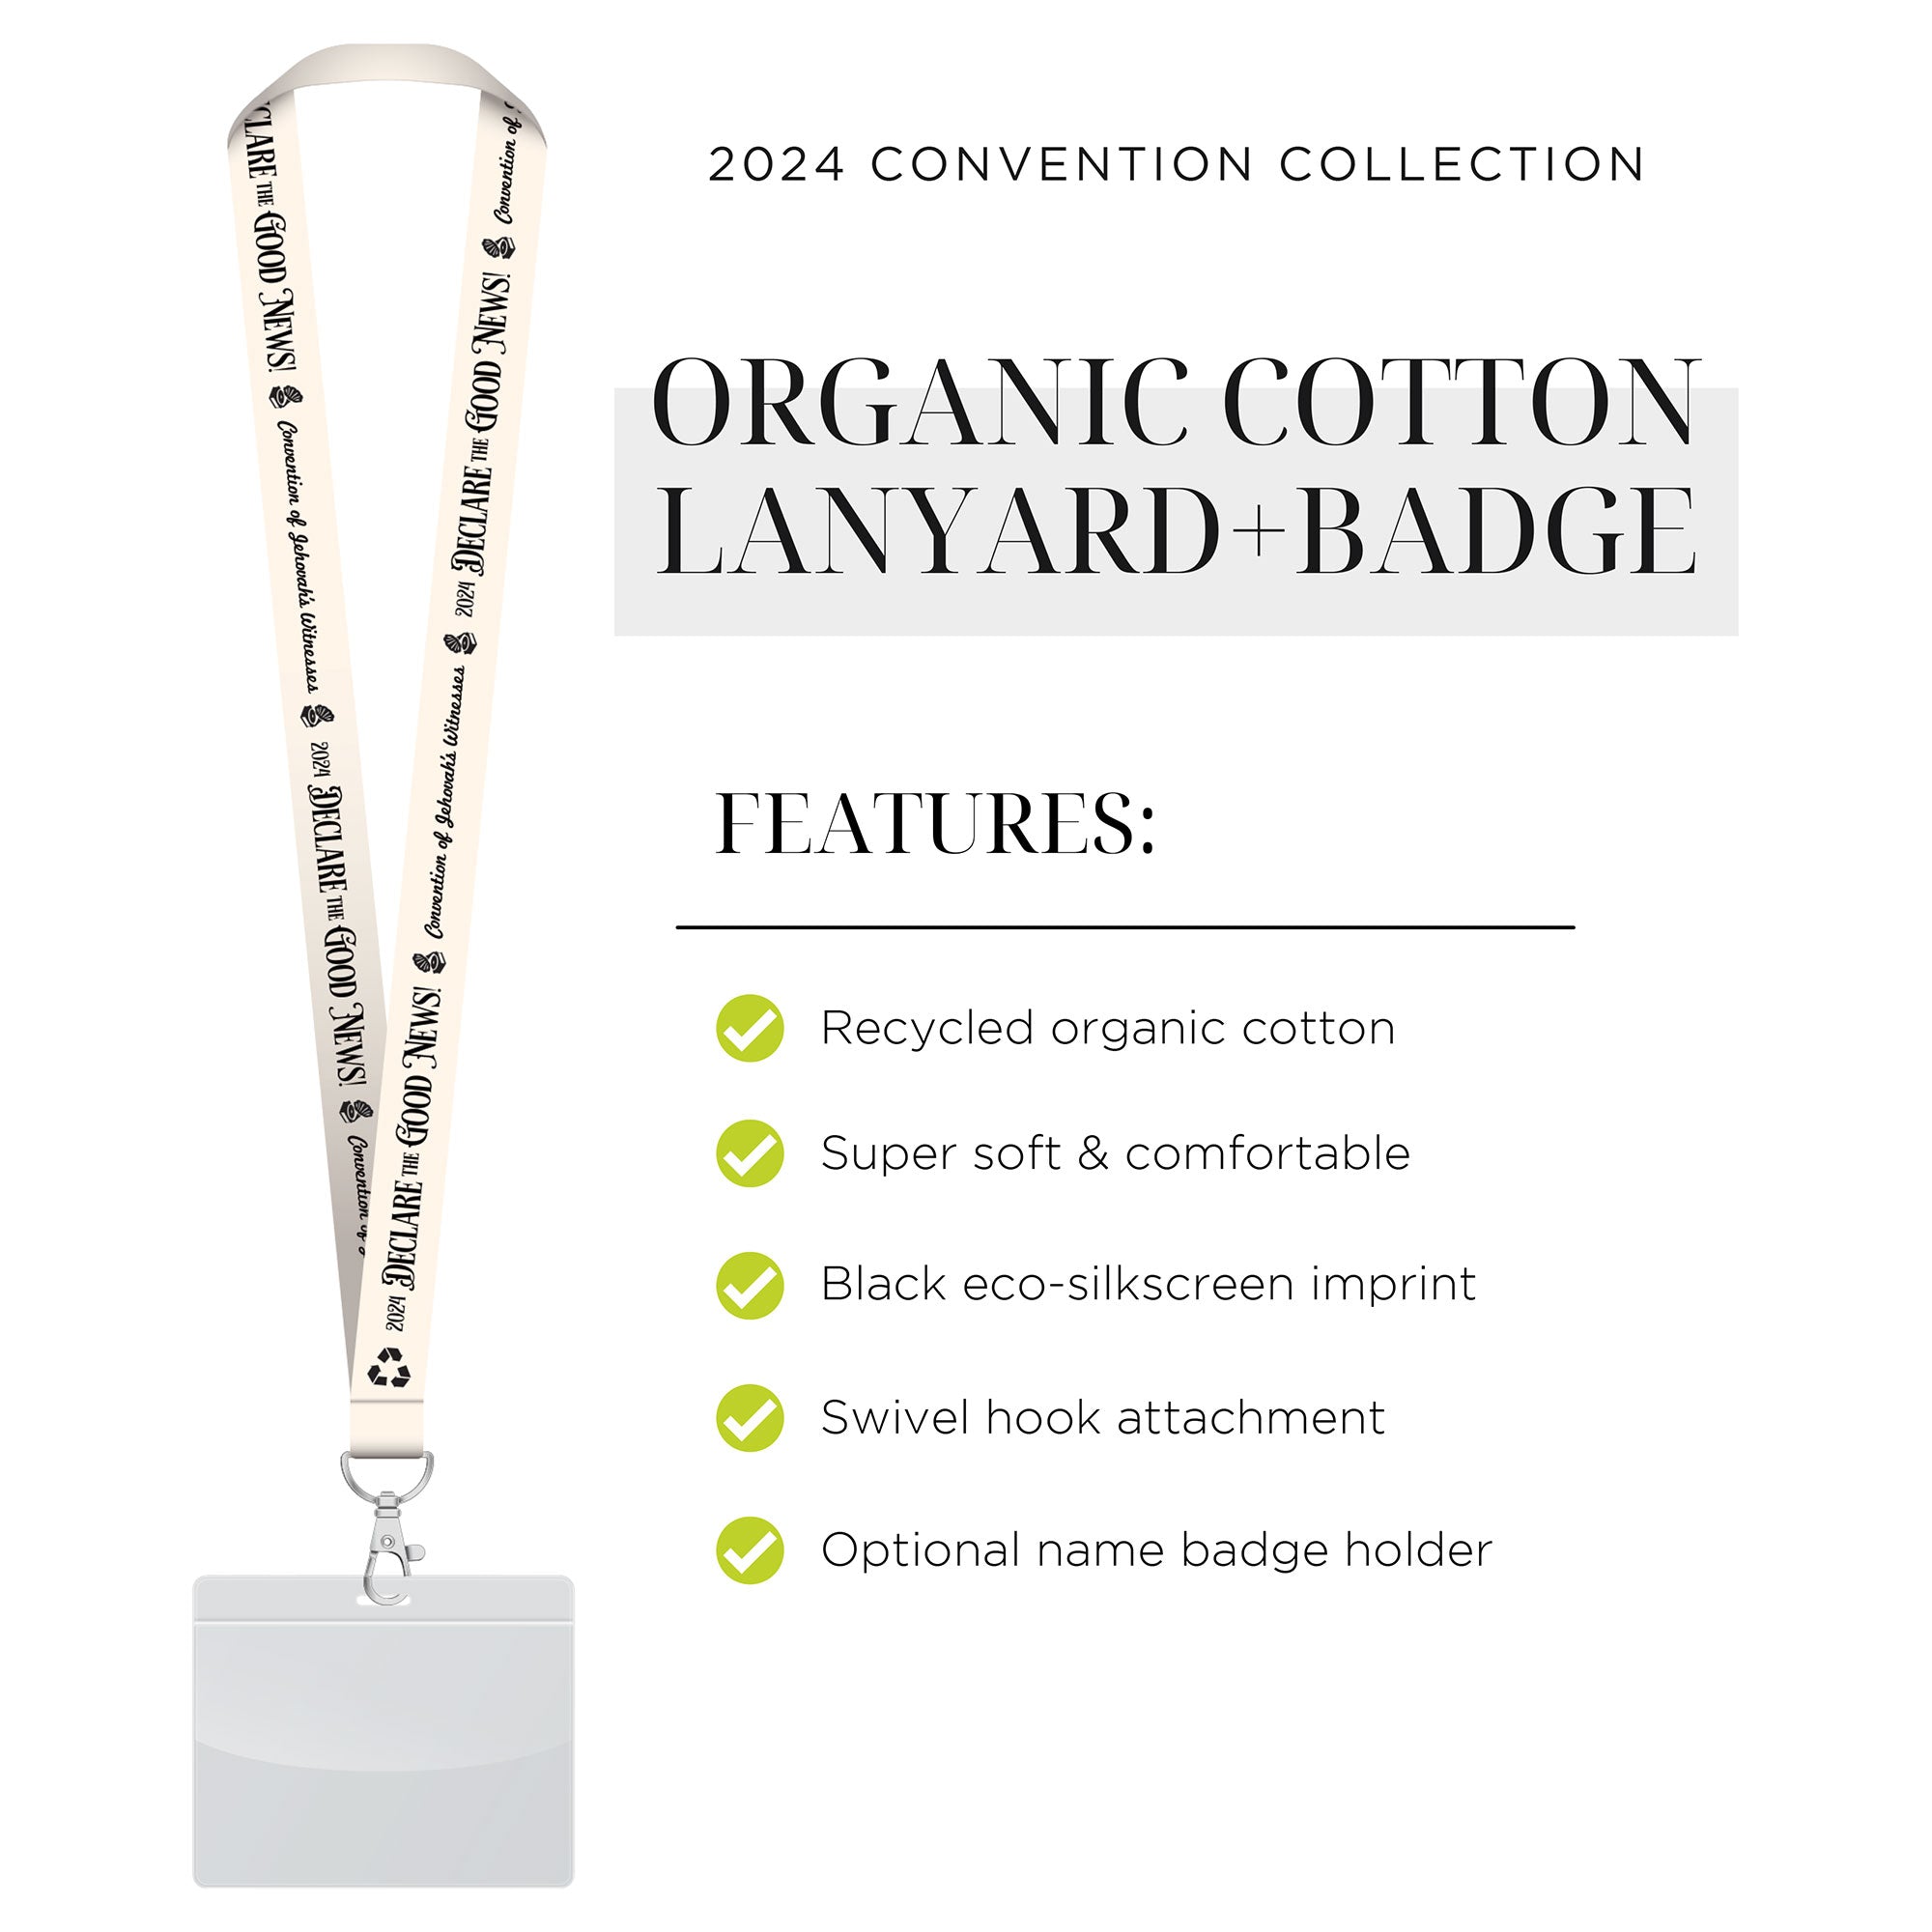 Eco Organic Cotton Lanyard: 2024 “Declare the Good News!”